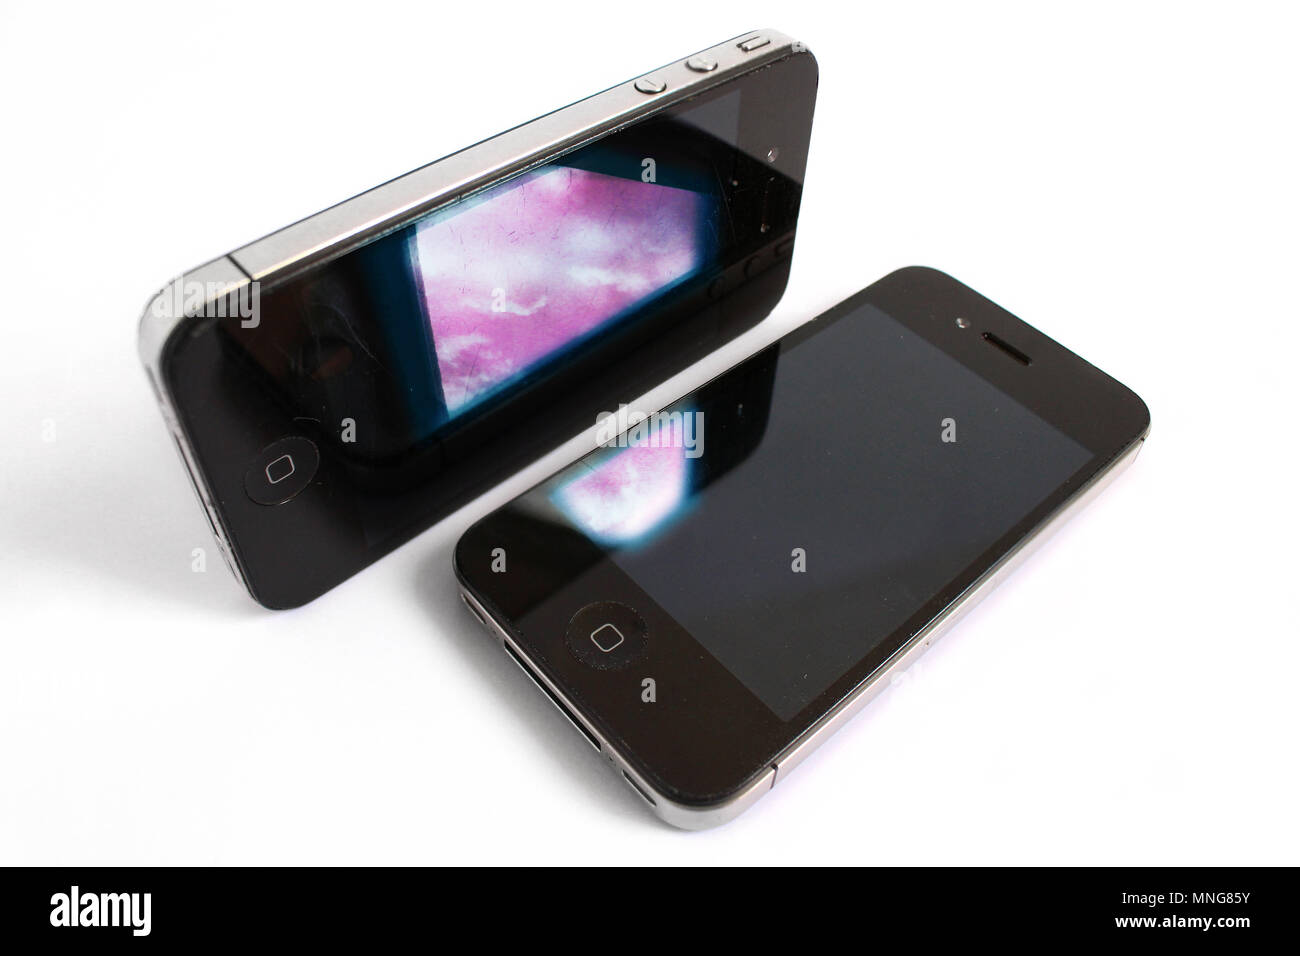 Iphone 4 e i-phone quattro s, doppia smatphone Foto Stock